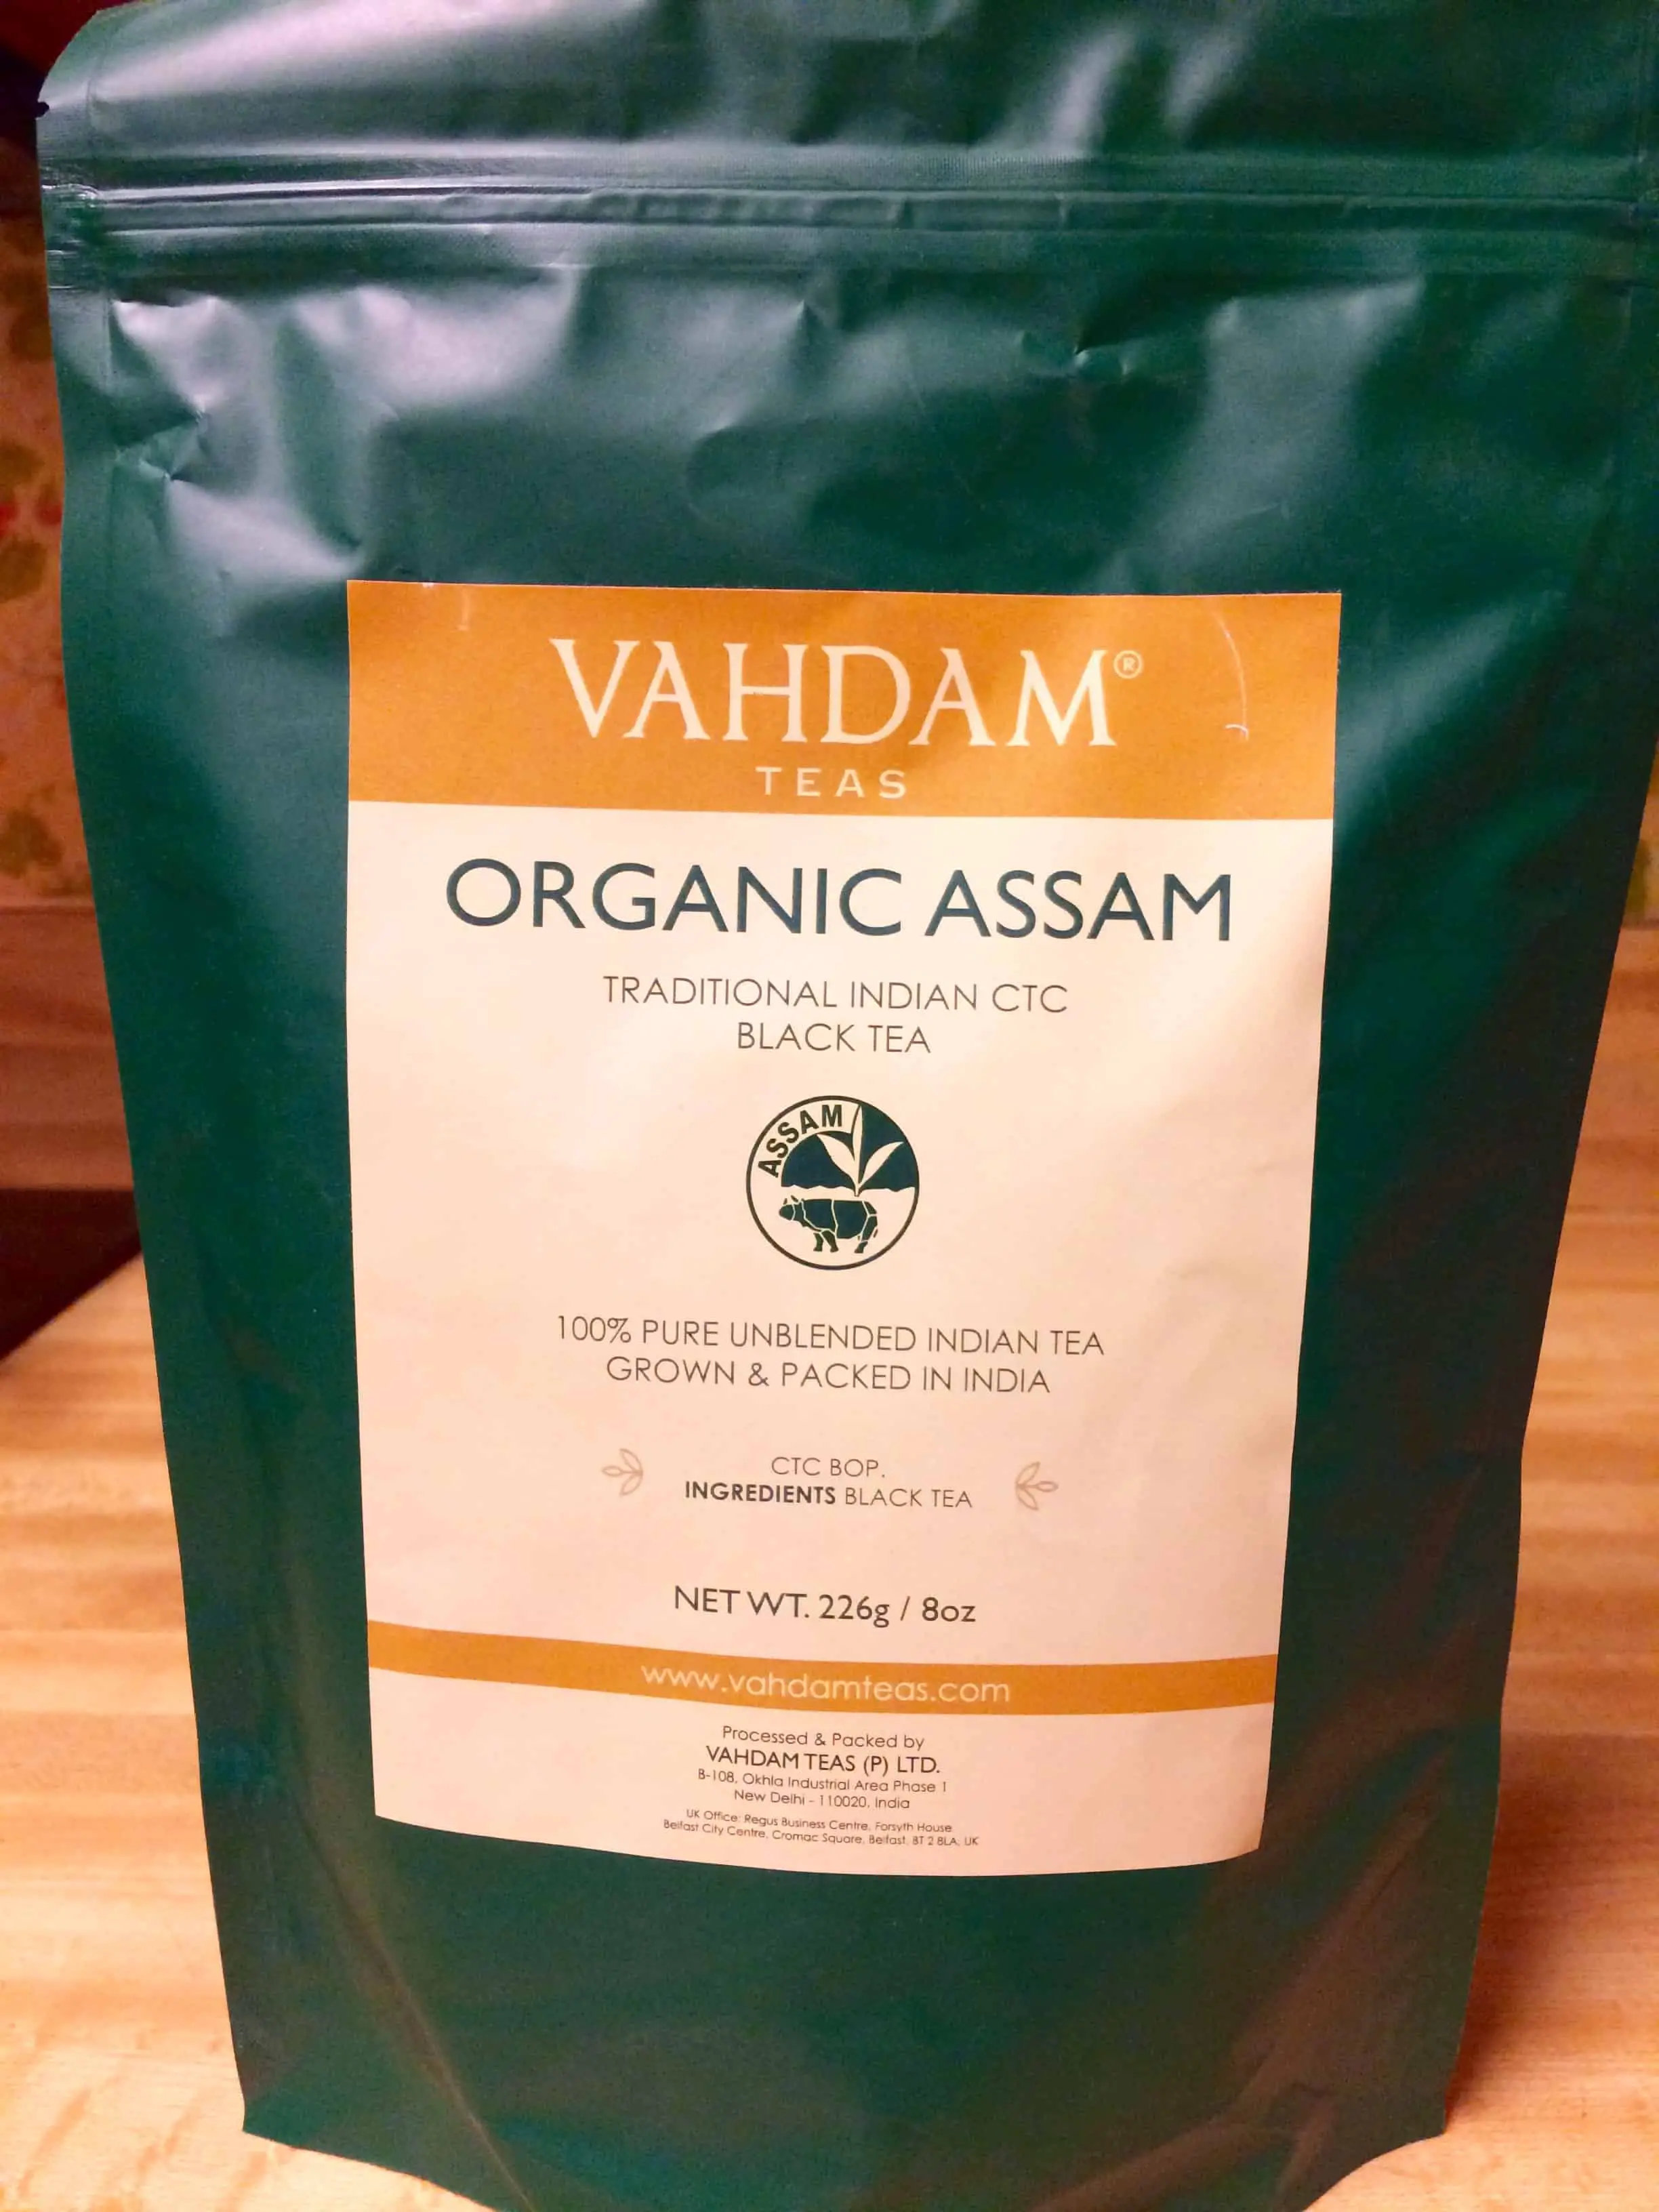 One of the best Assam black teas is from Vahdam Tea Co